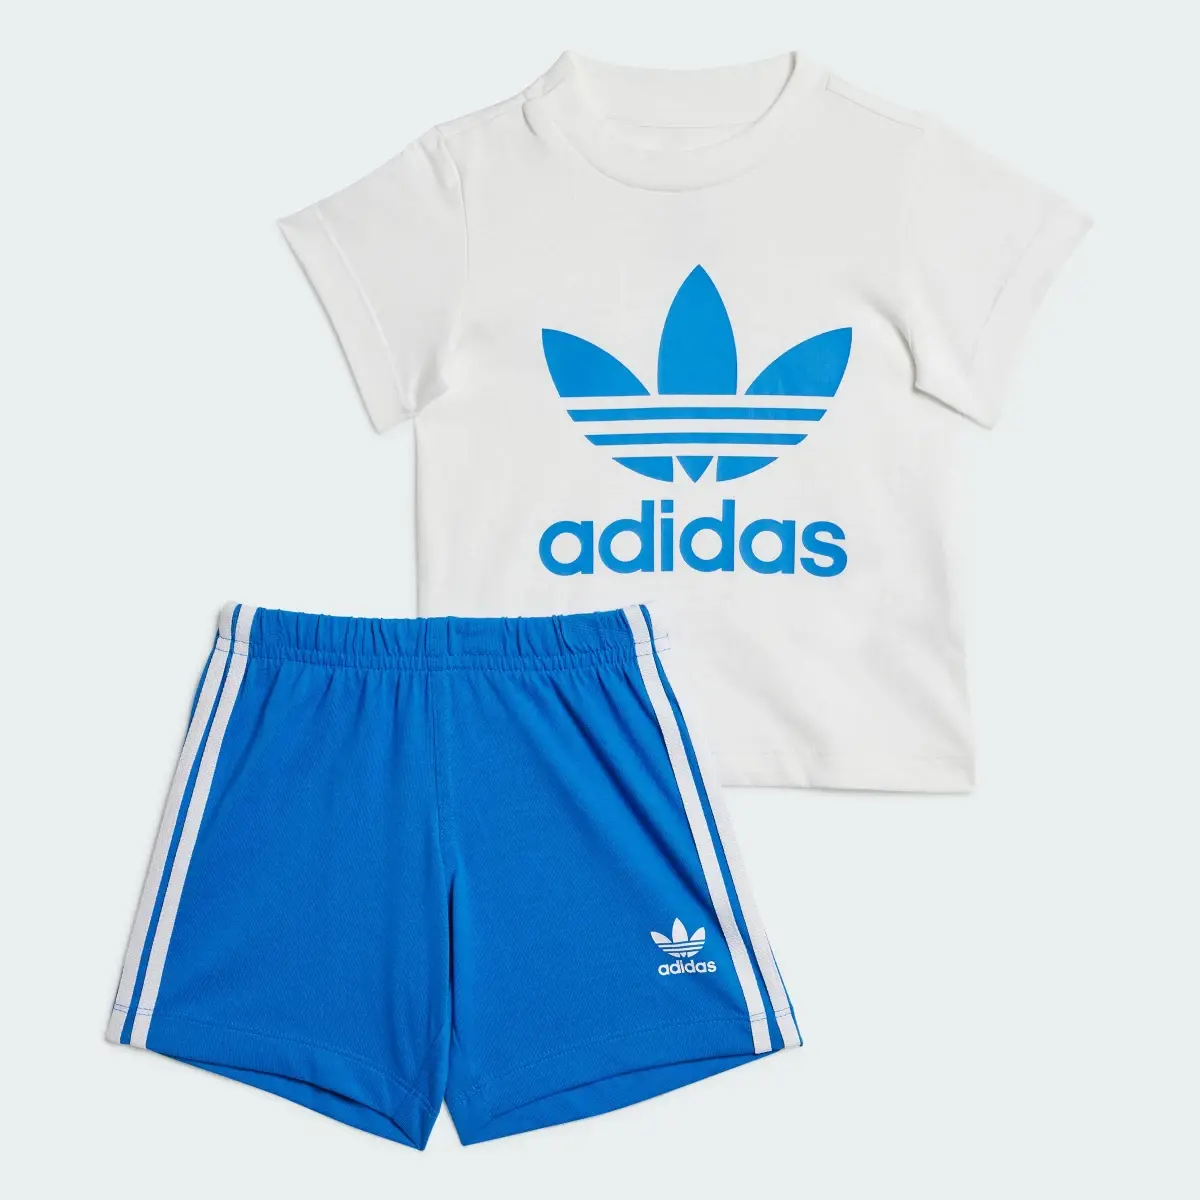 Adidas Adicolor Trefoil Shorts Tee Set. 2